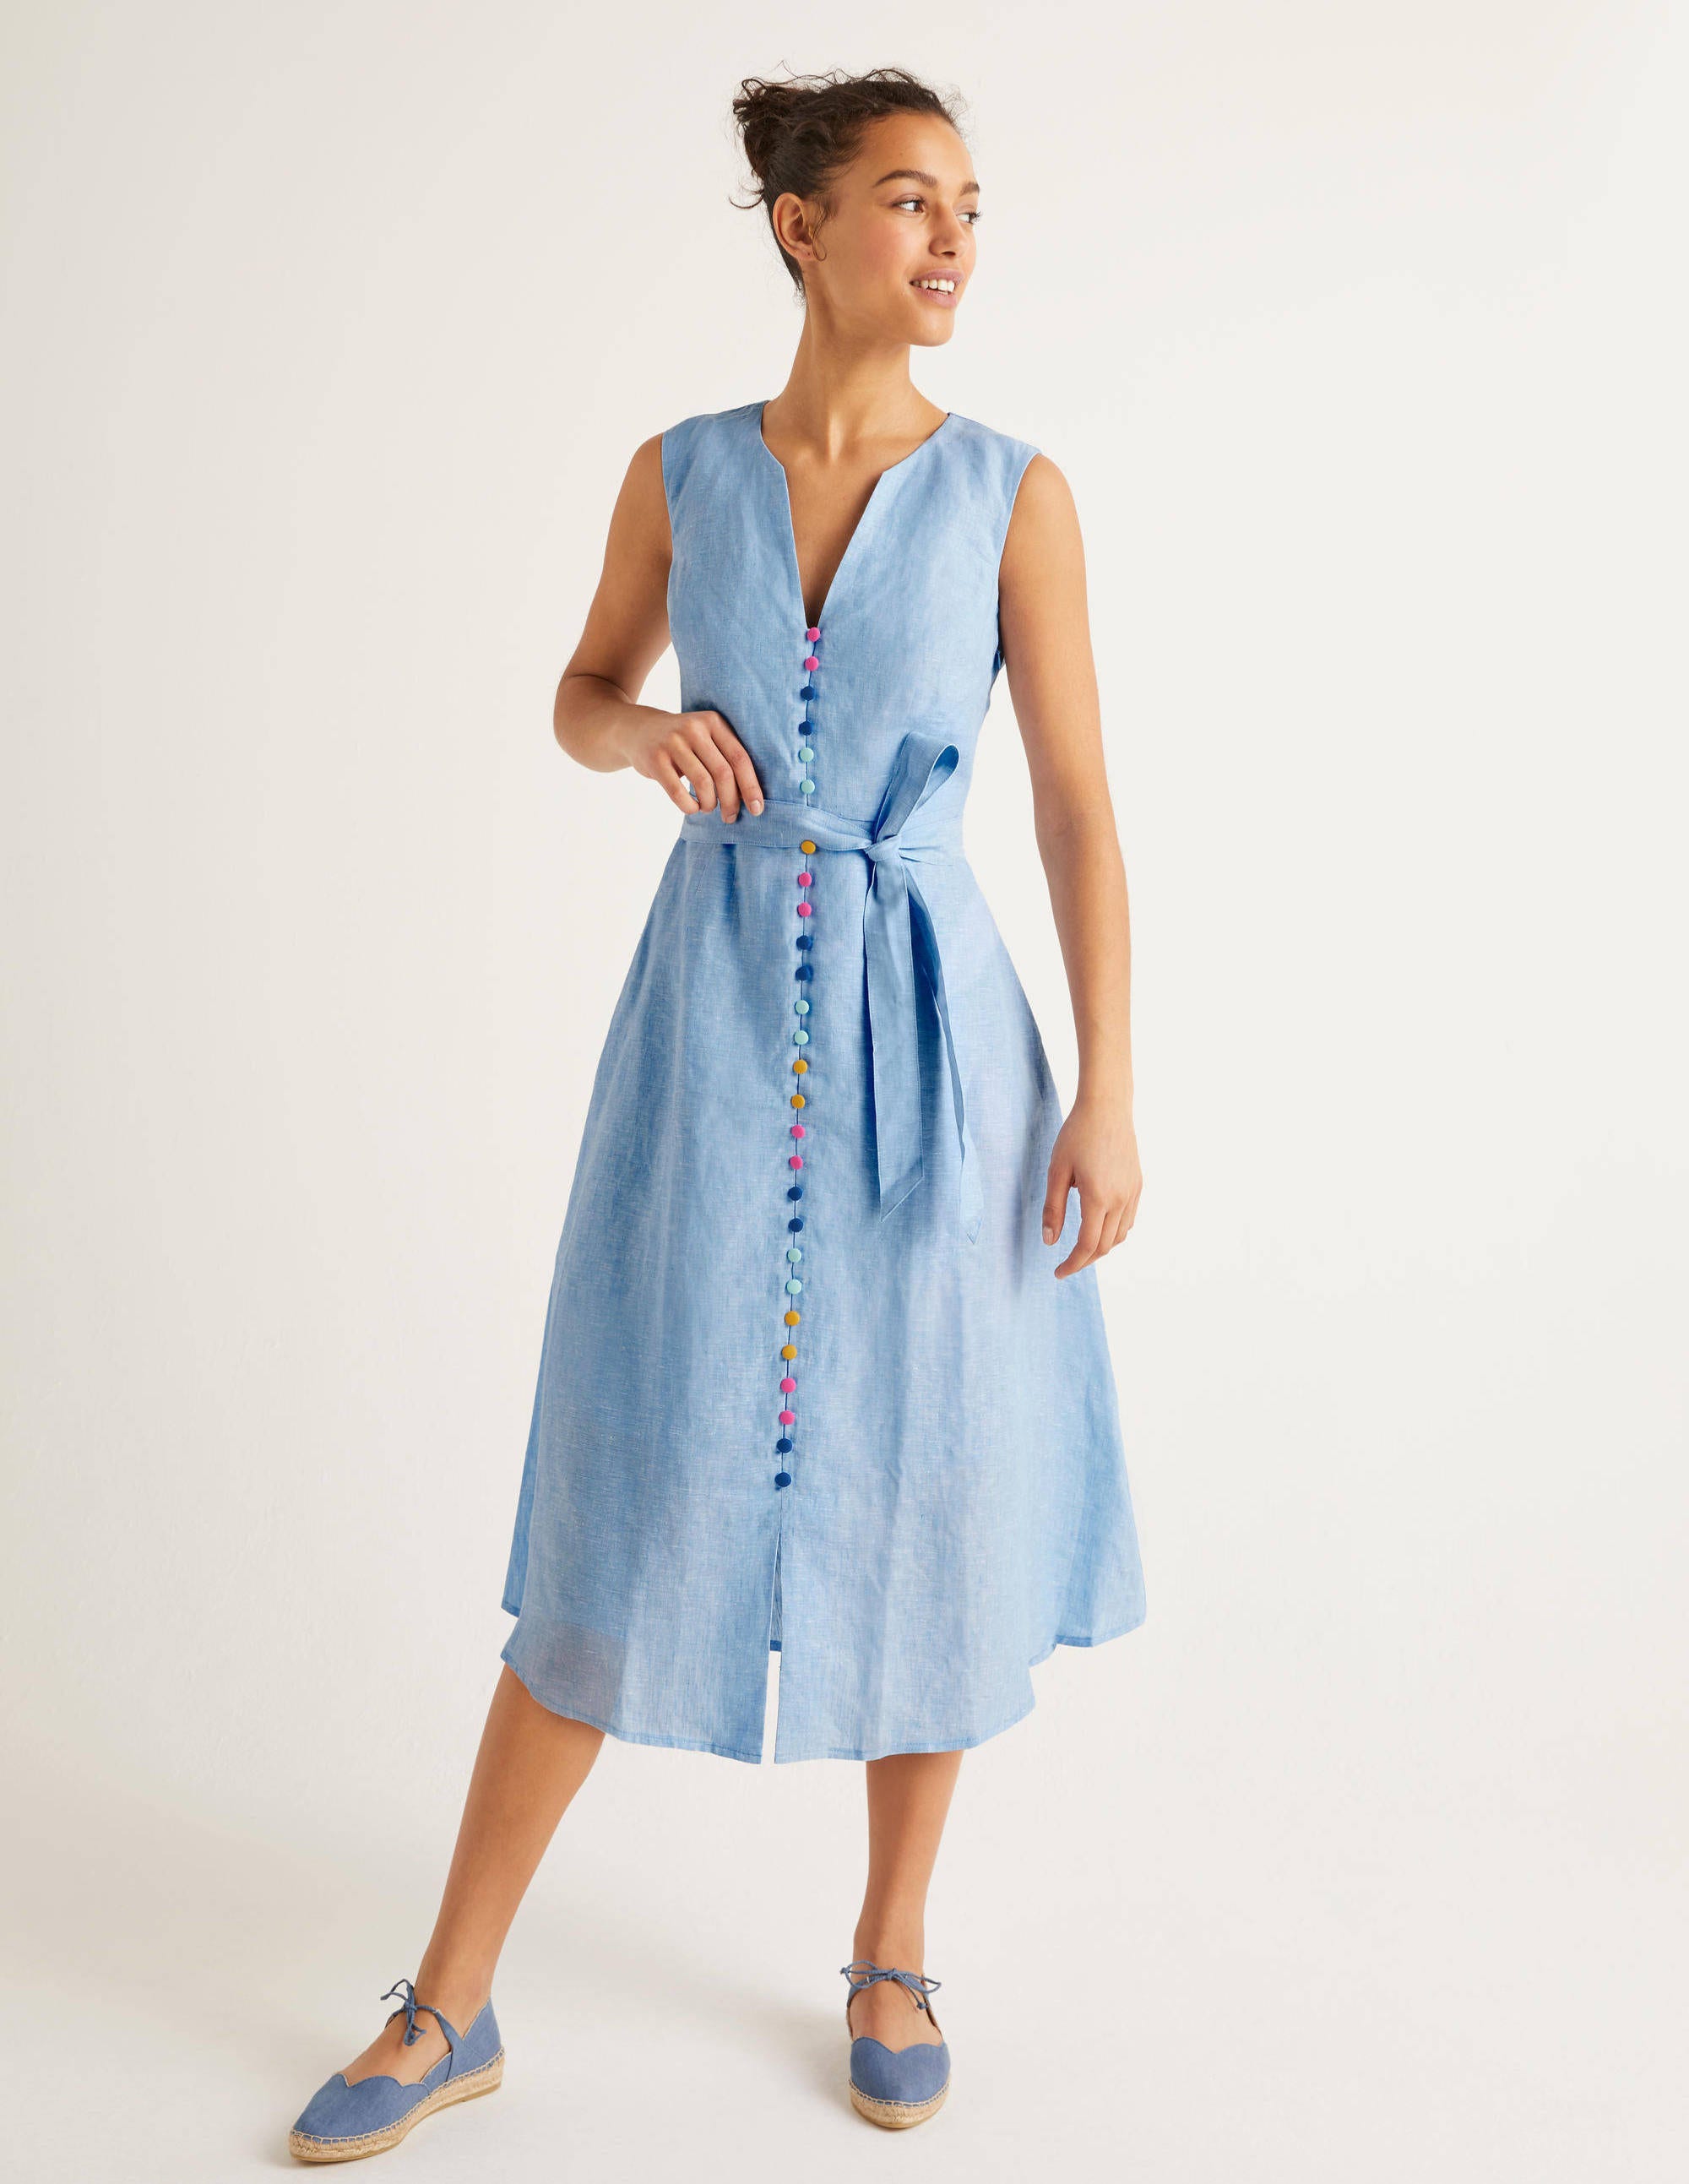 linen dress with buttons